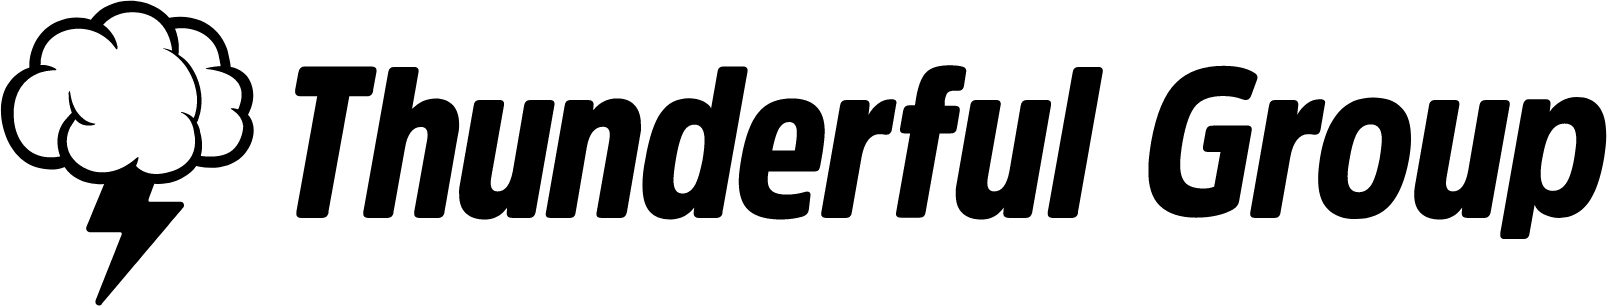 Thunderful Group logo large (transparent PNG)